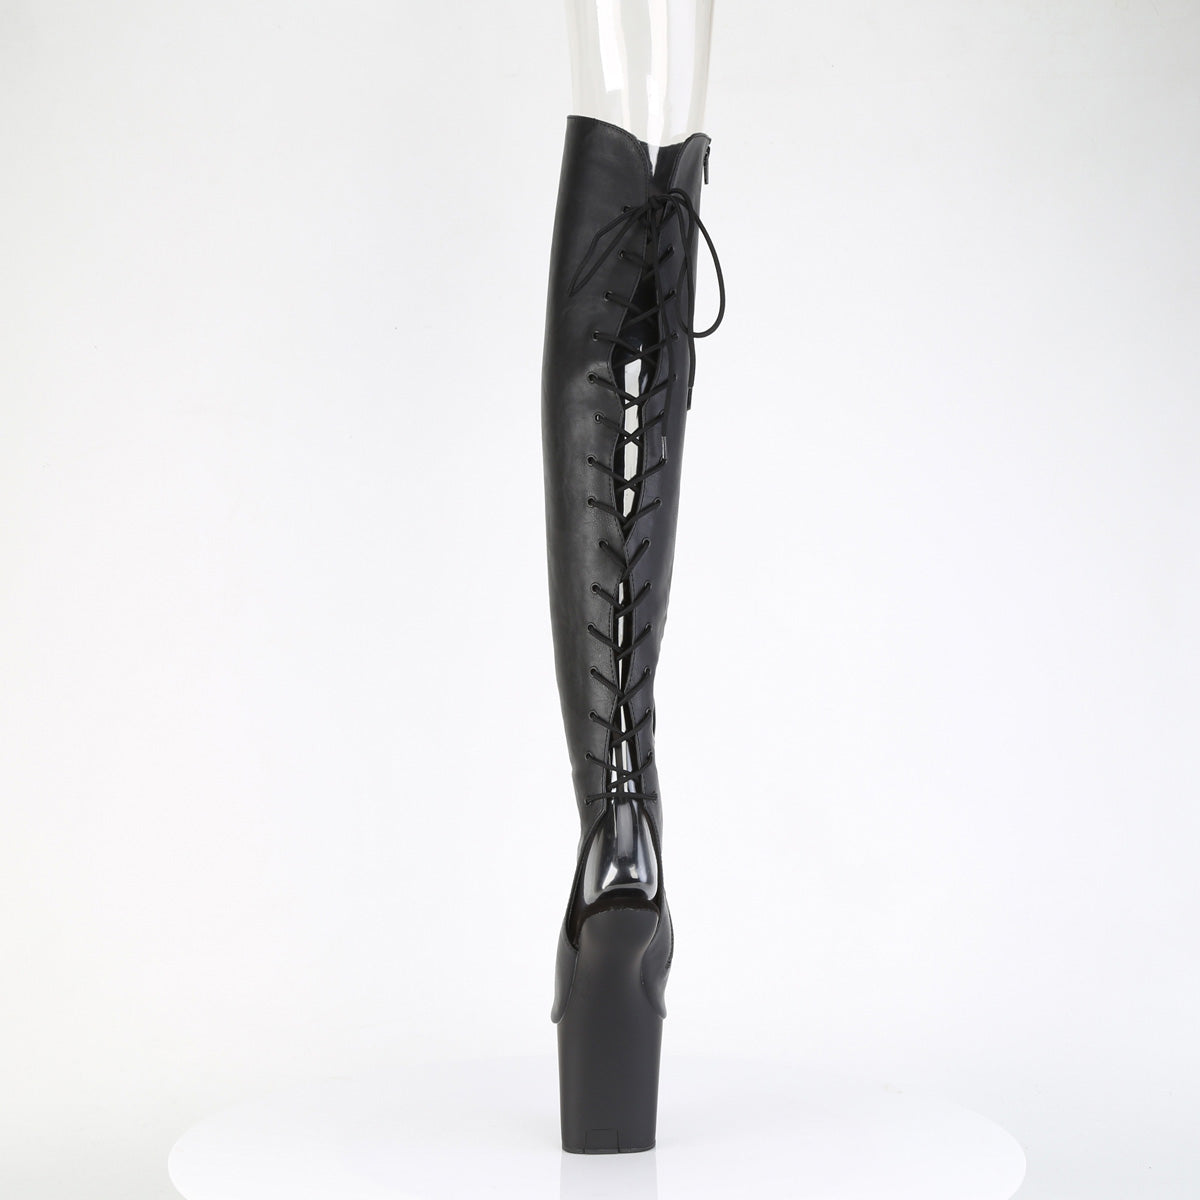 CRAZE-3019 Pleaser Pole Dancing Thigh High Boots